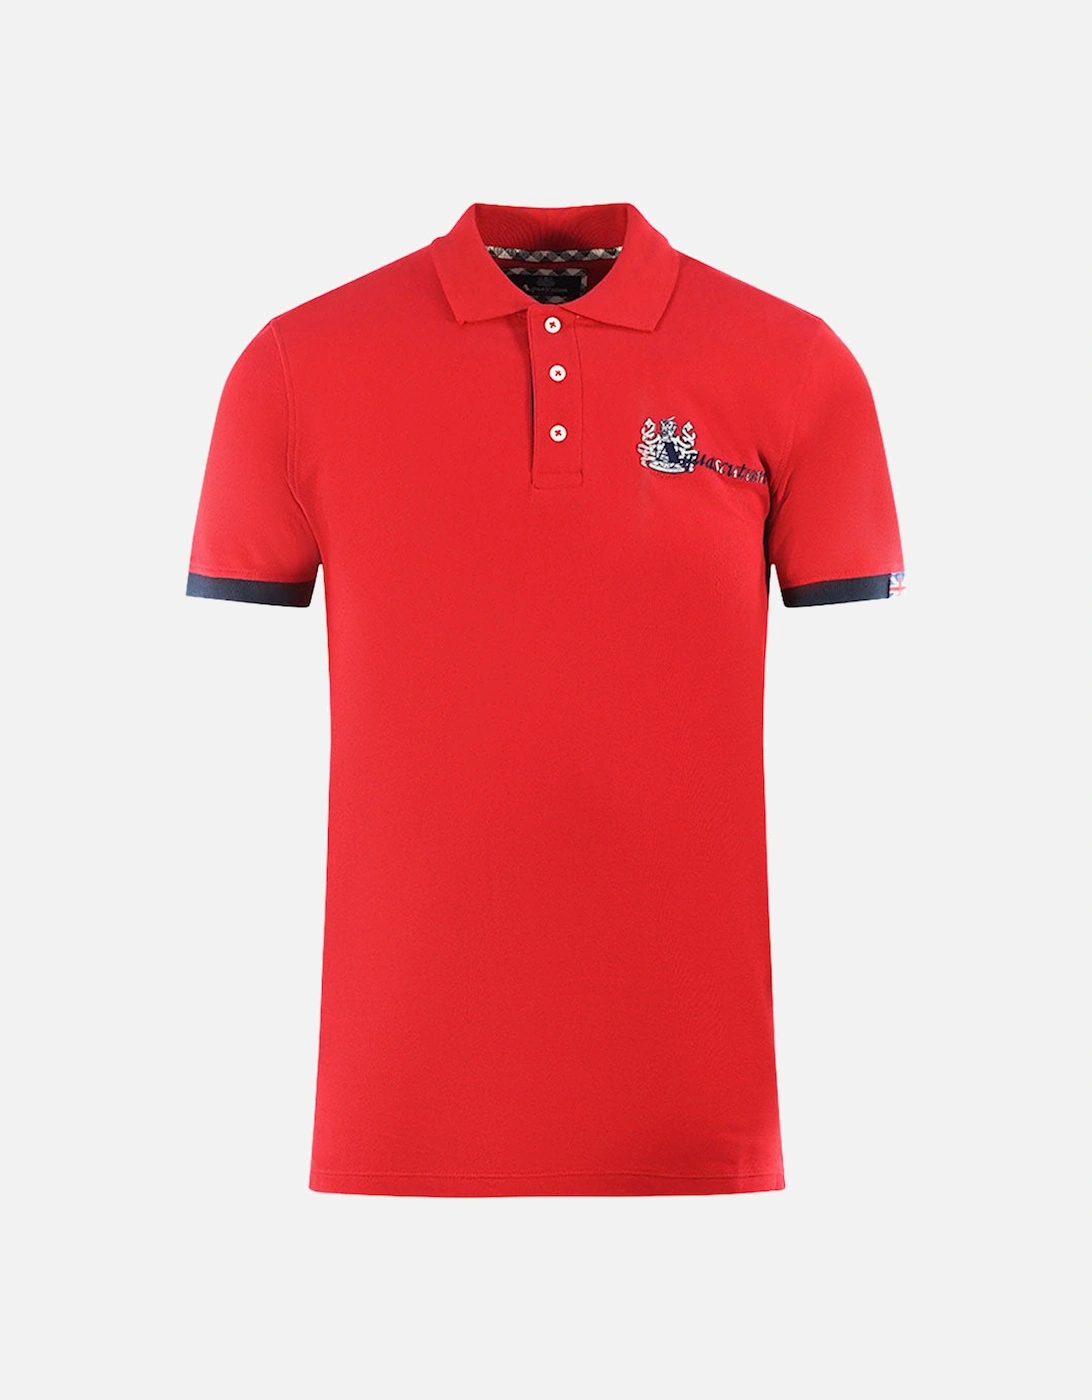 London Aldis Red Polo Shirt, 4 of 3